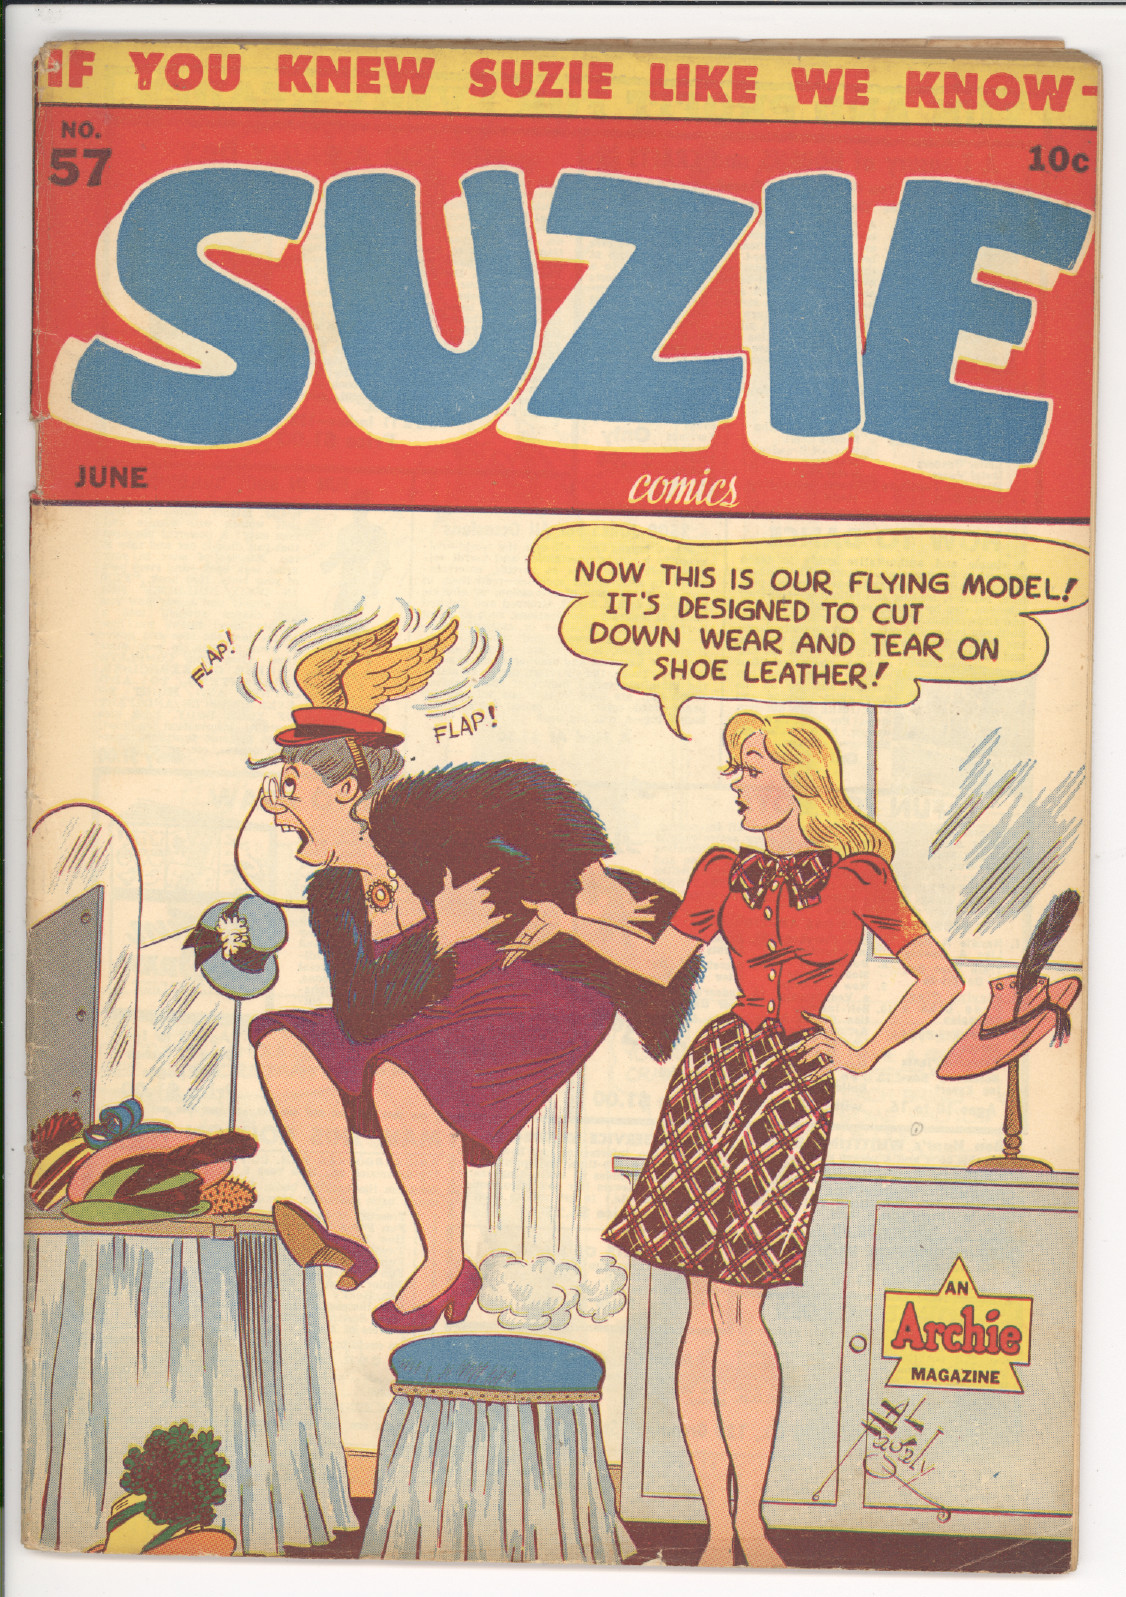 Suzie Comics  #57